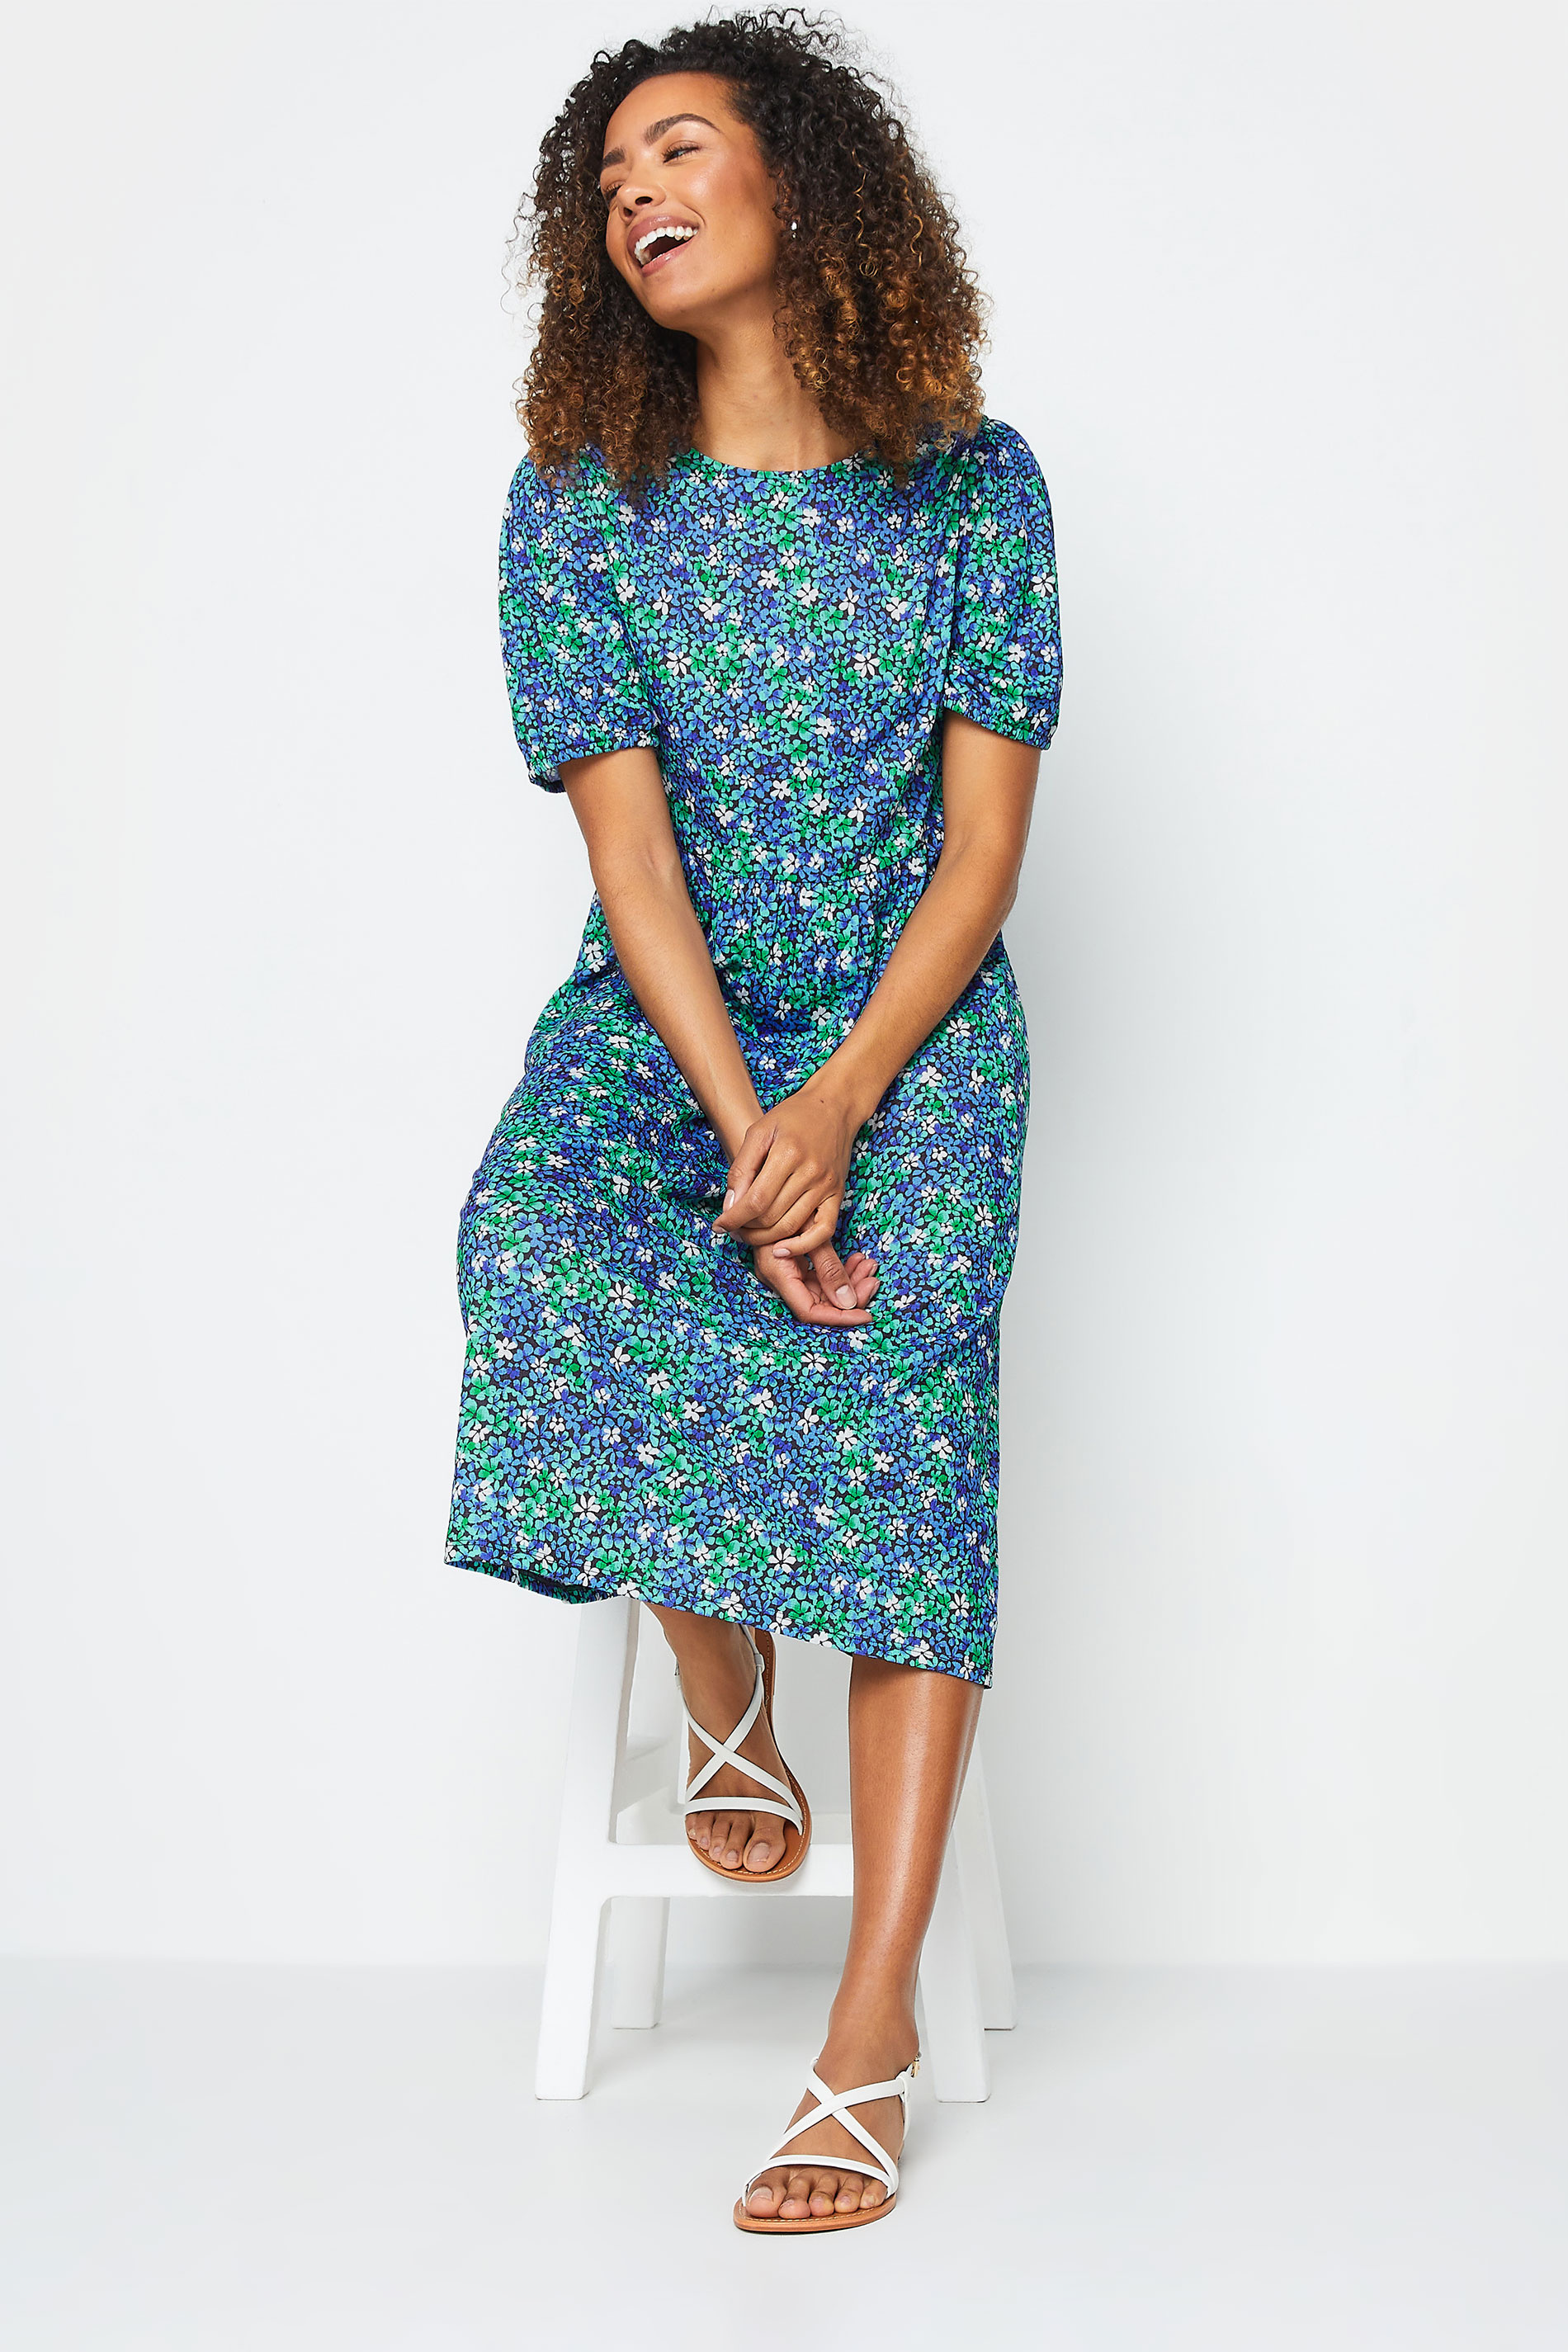 M&Co Blue Dity Floral Print Short Sleeve Smock Dress | M&Co 2